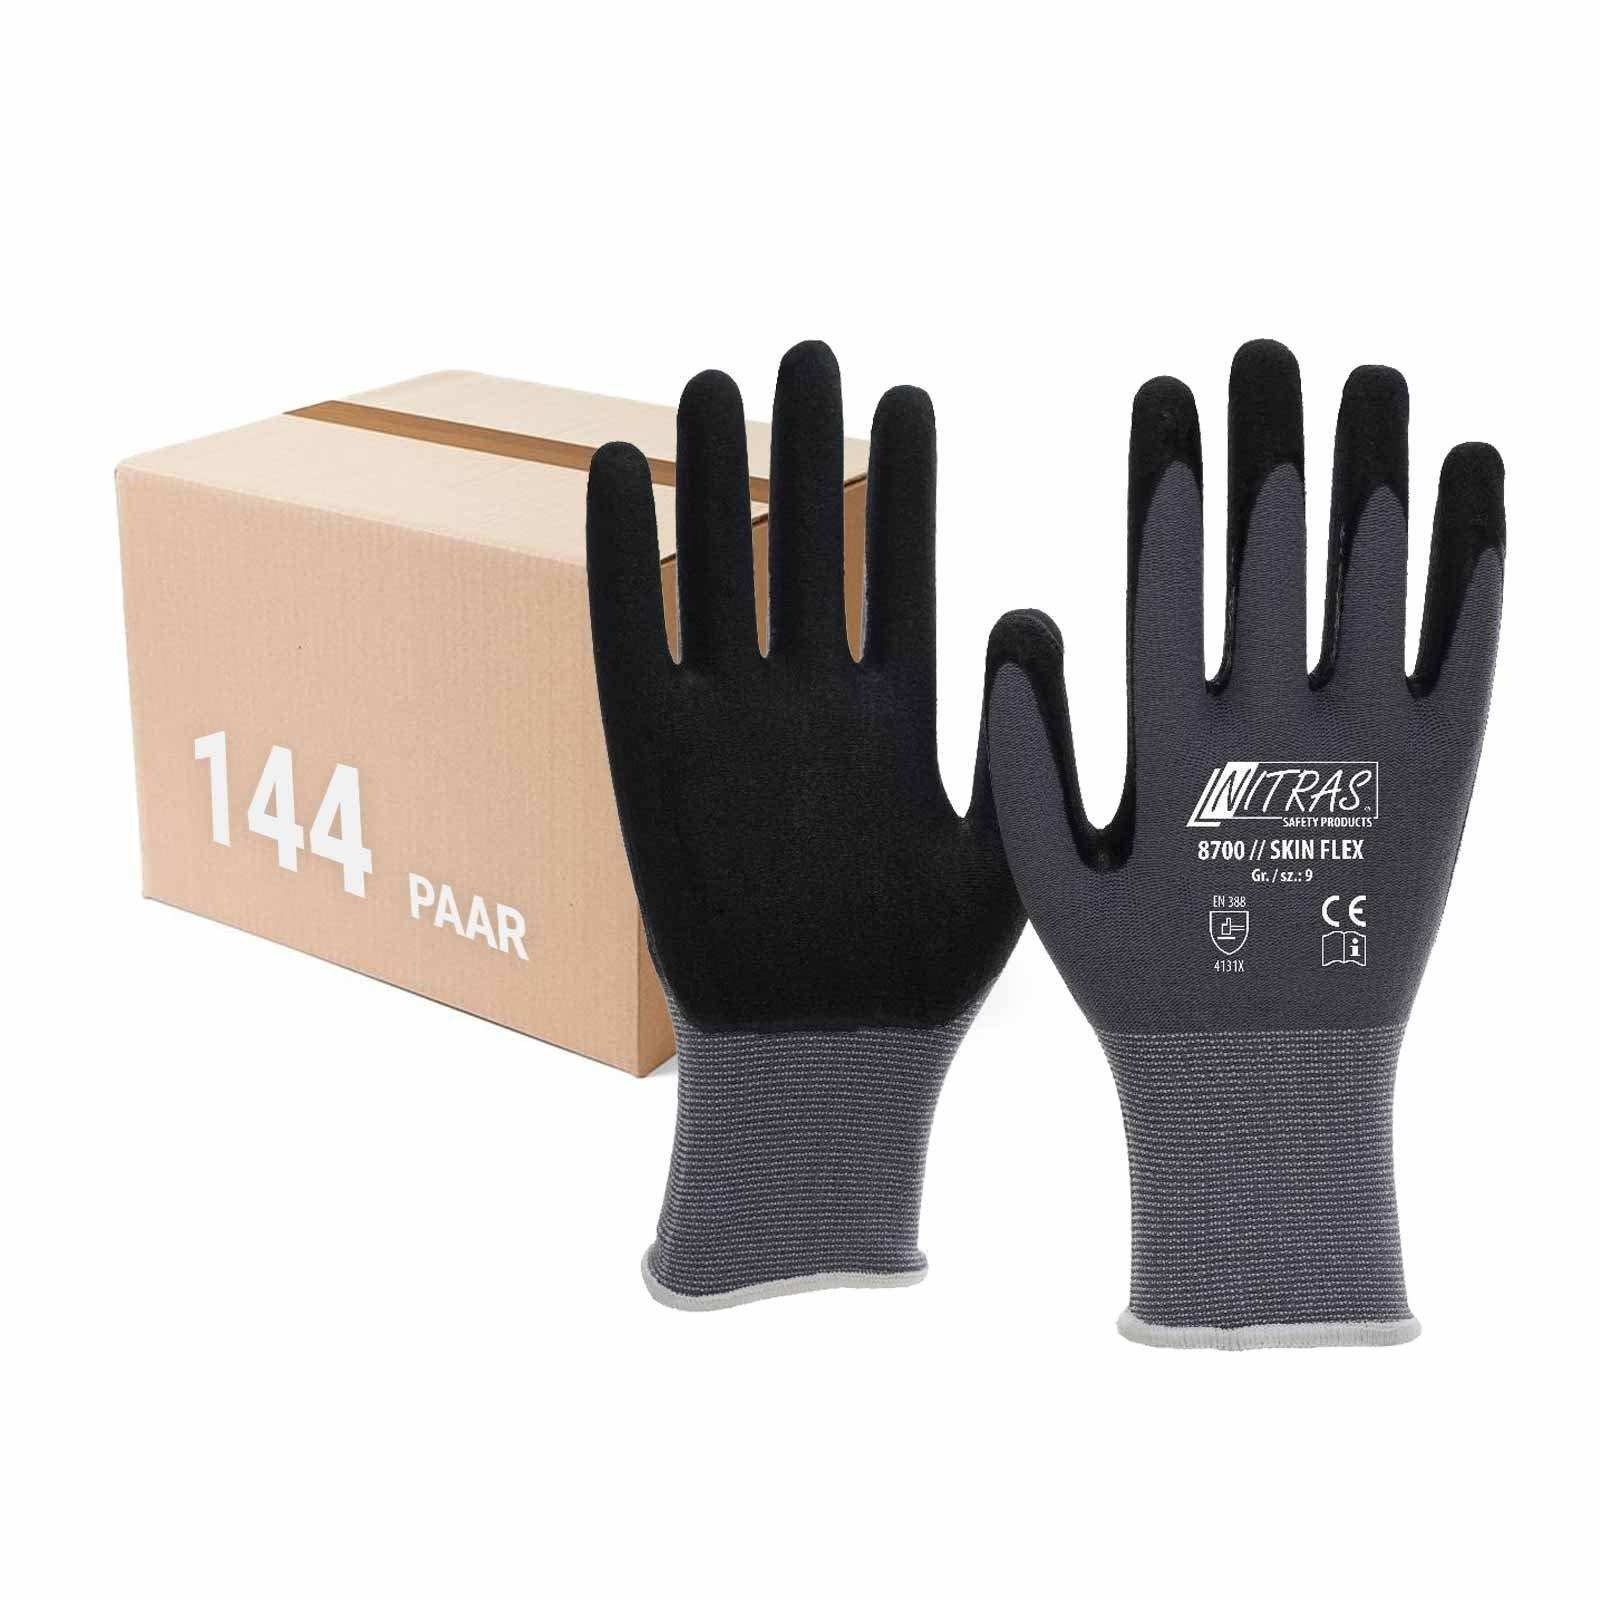 Nitras Nitril-Handschuhe NITRAS Skin-Flex Strickhandschuhe 8700 gestrickte Handschuhe -144 Paar (Spar-Set) | Strickhandschuhe